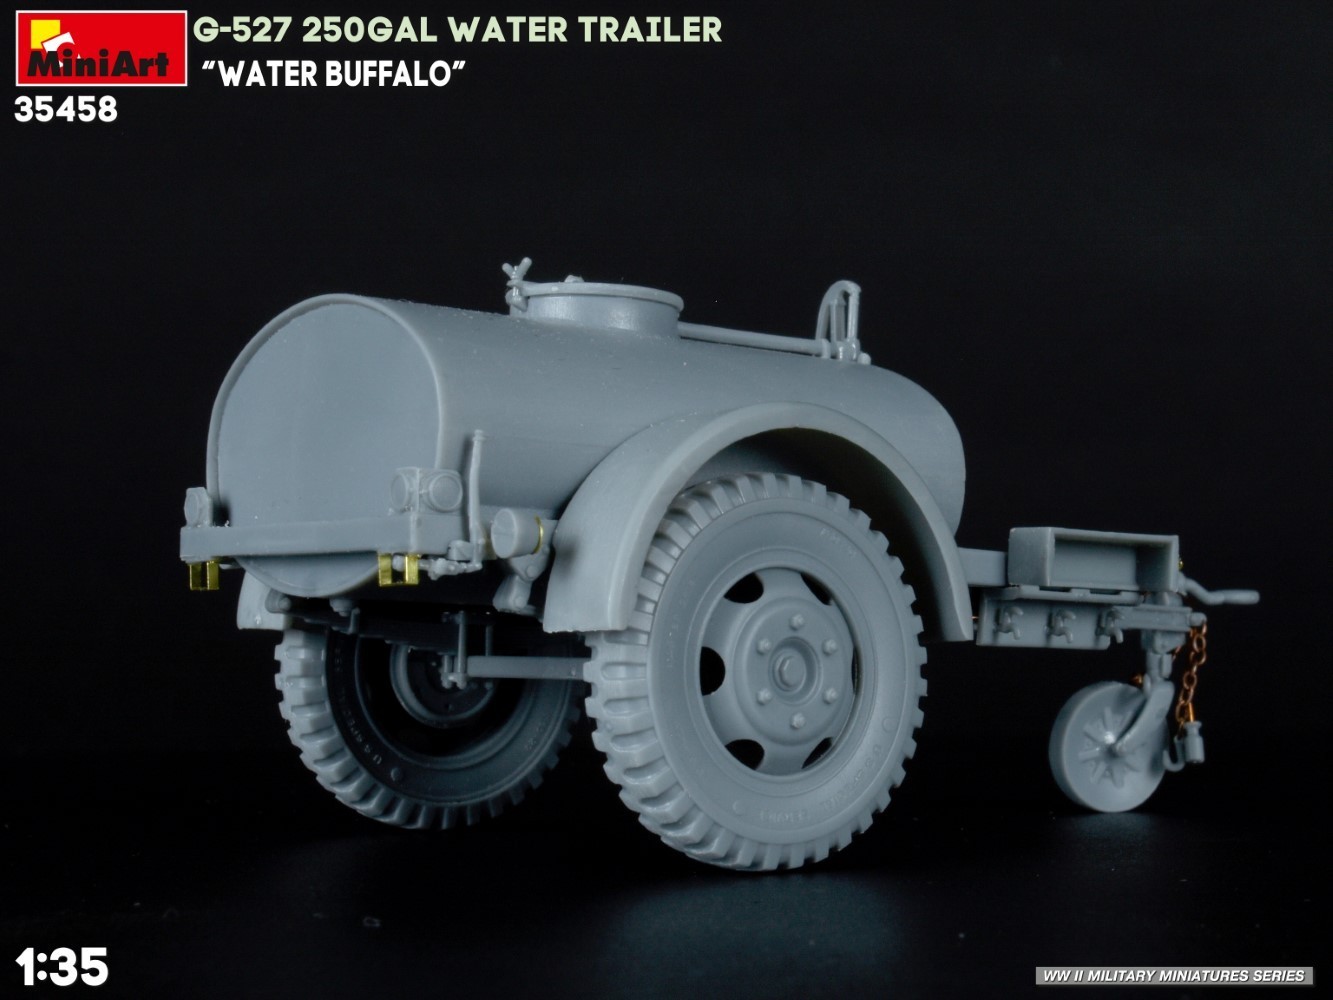 MiniArt G-527 250GAL Water Trailer “Water Buffalo” Test Build